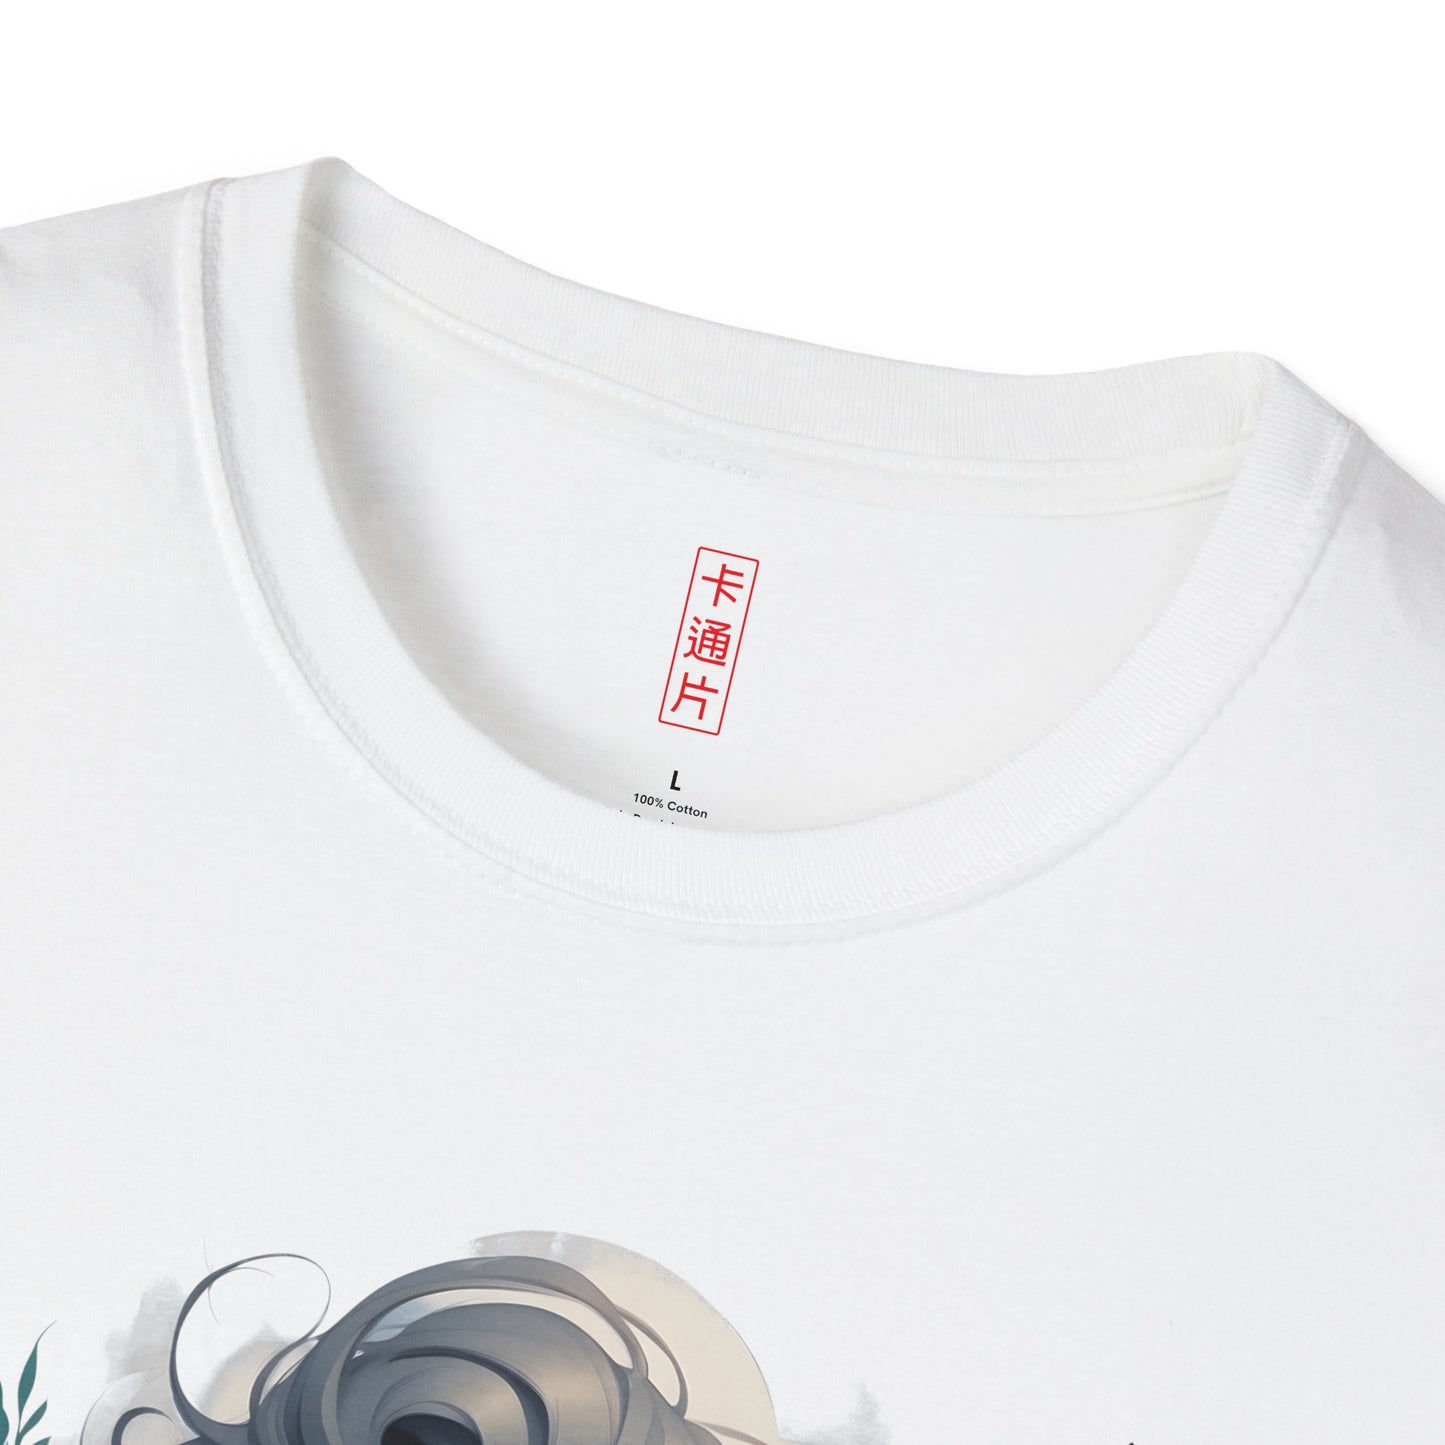 Kǎtōng Piàn - California Love Collection - 007 - Unisex Softstyle T-Shirt Printify